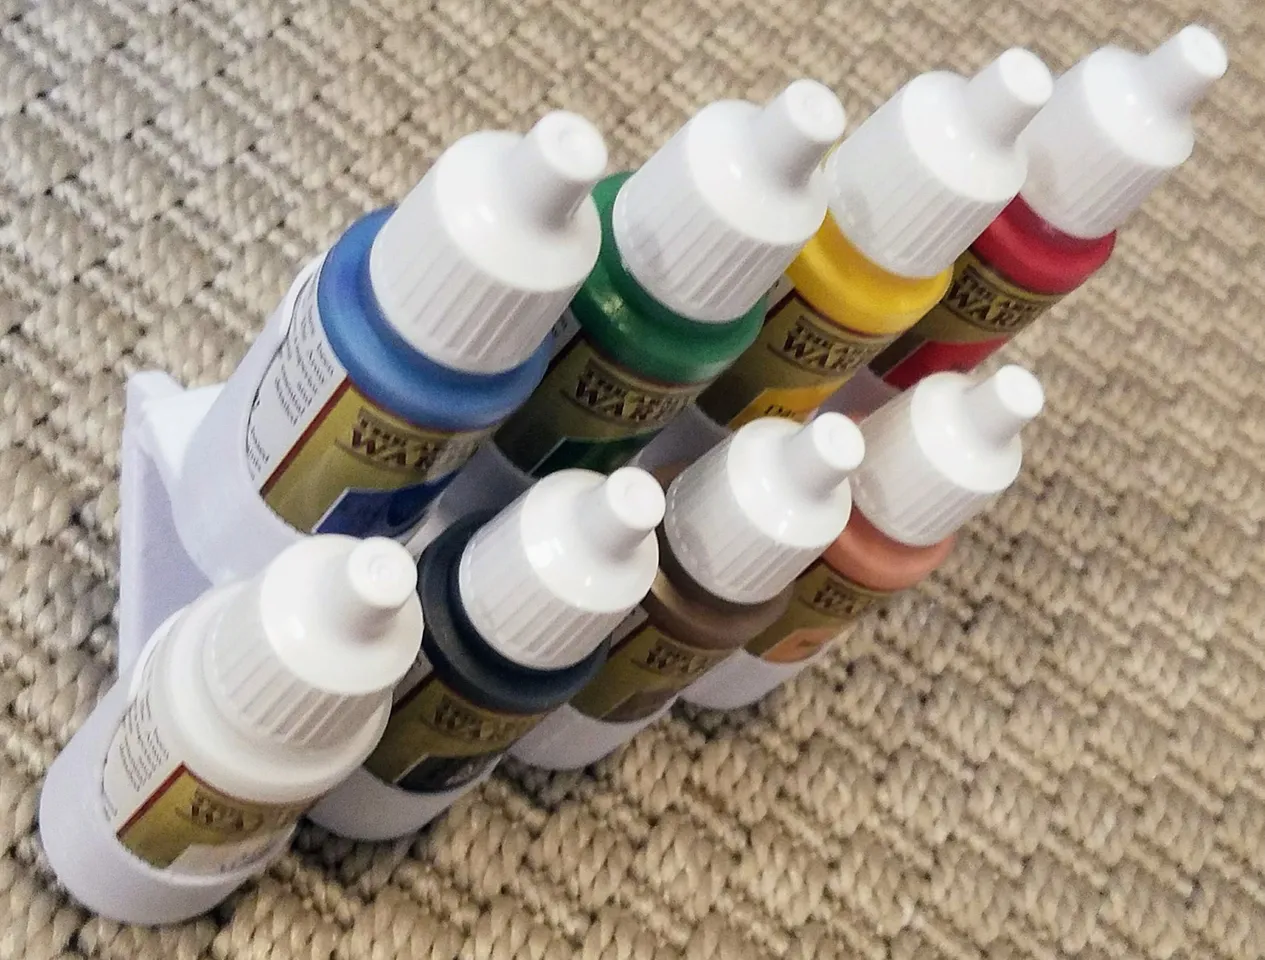 Hobby Storage - 2 oz Acrylic Paint Racks Holders for Ikea Skadis Peg Board